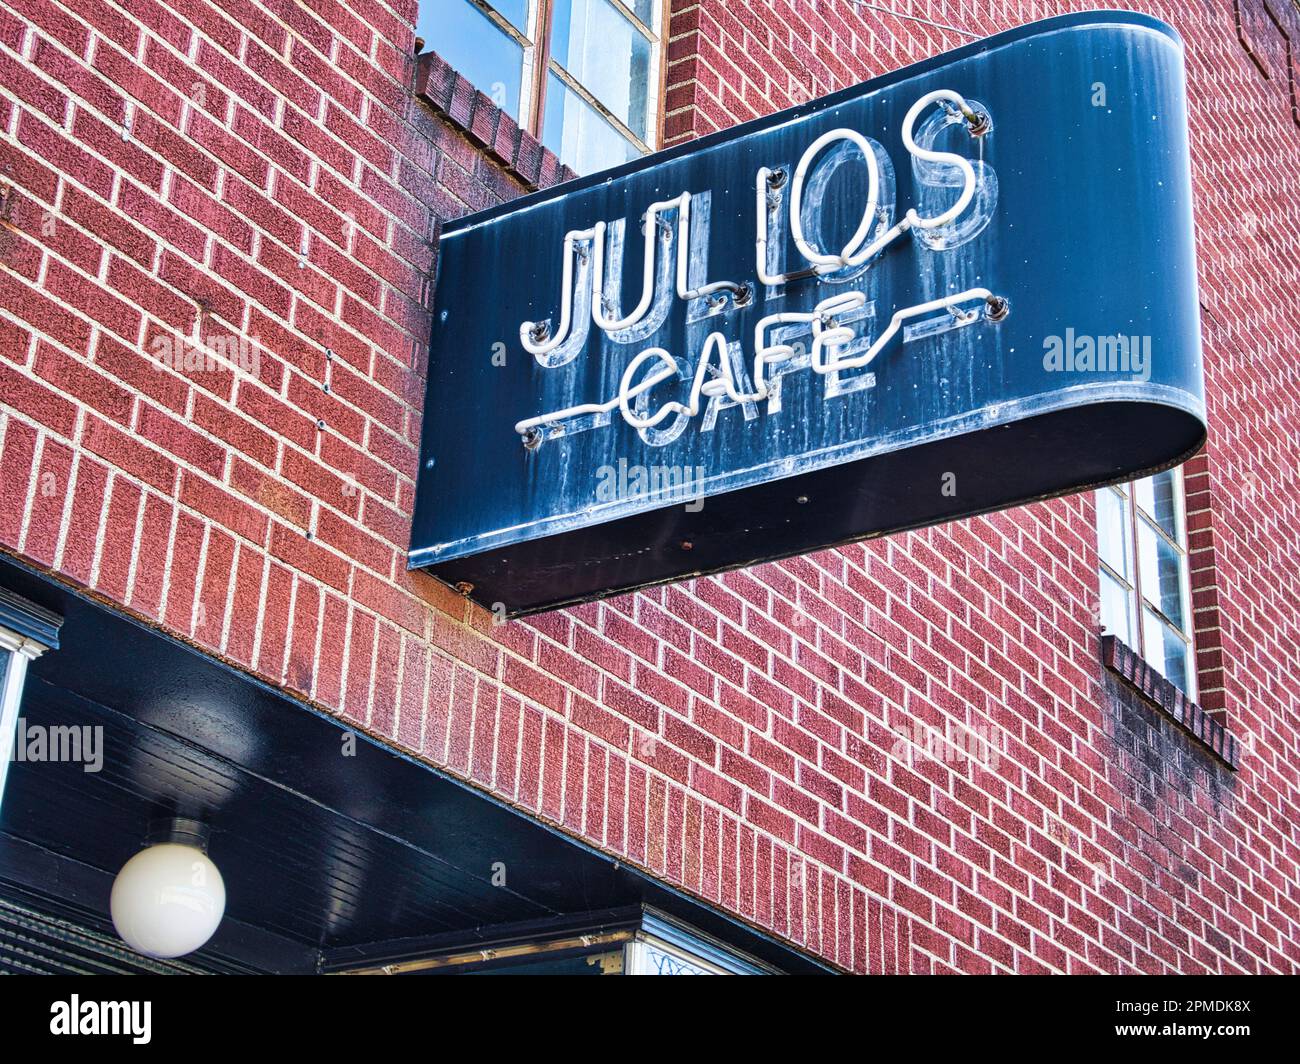 Julios Cafe vintage neon sign Stock Photo